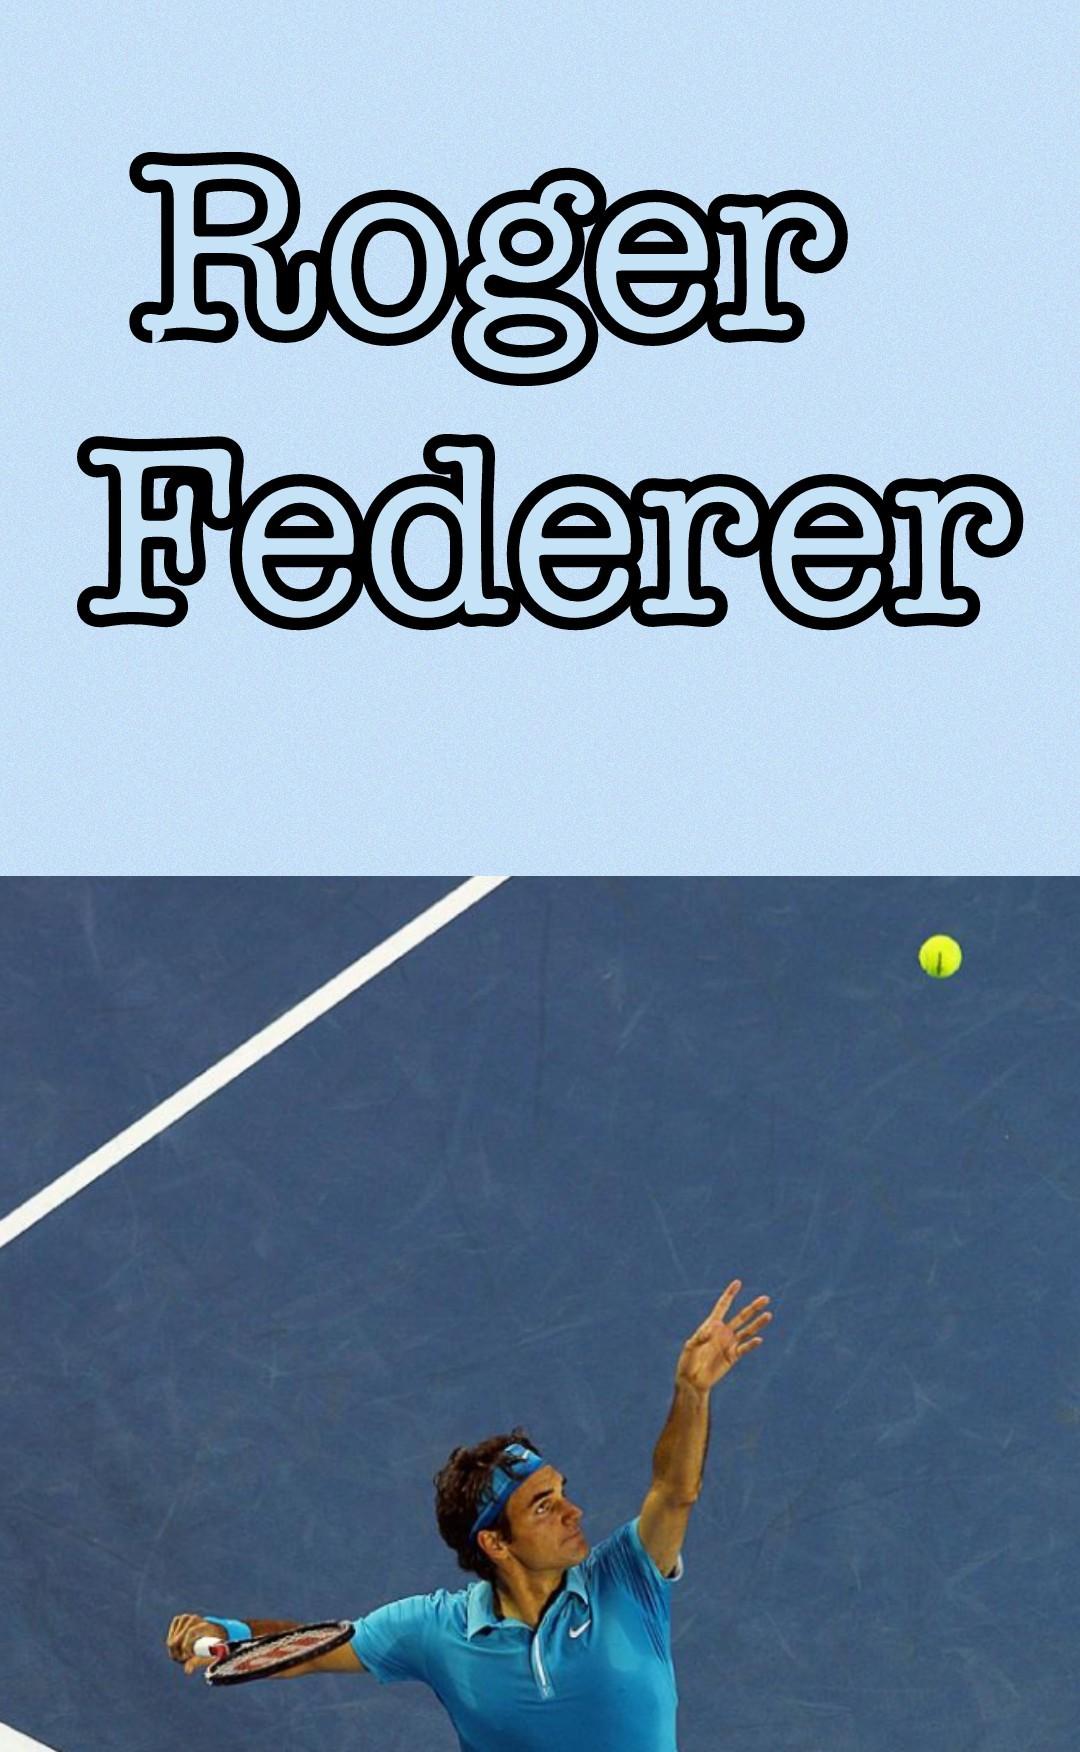 Roger  Federer